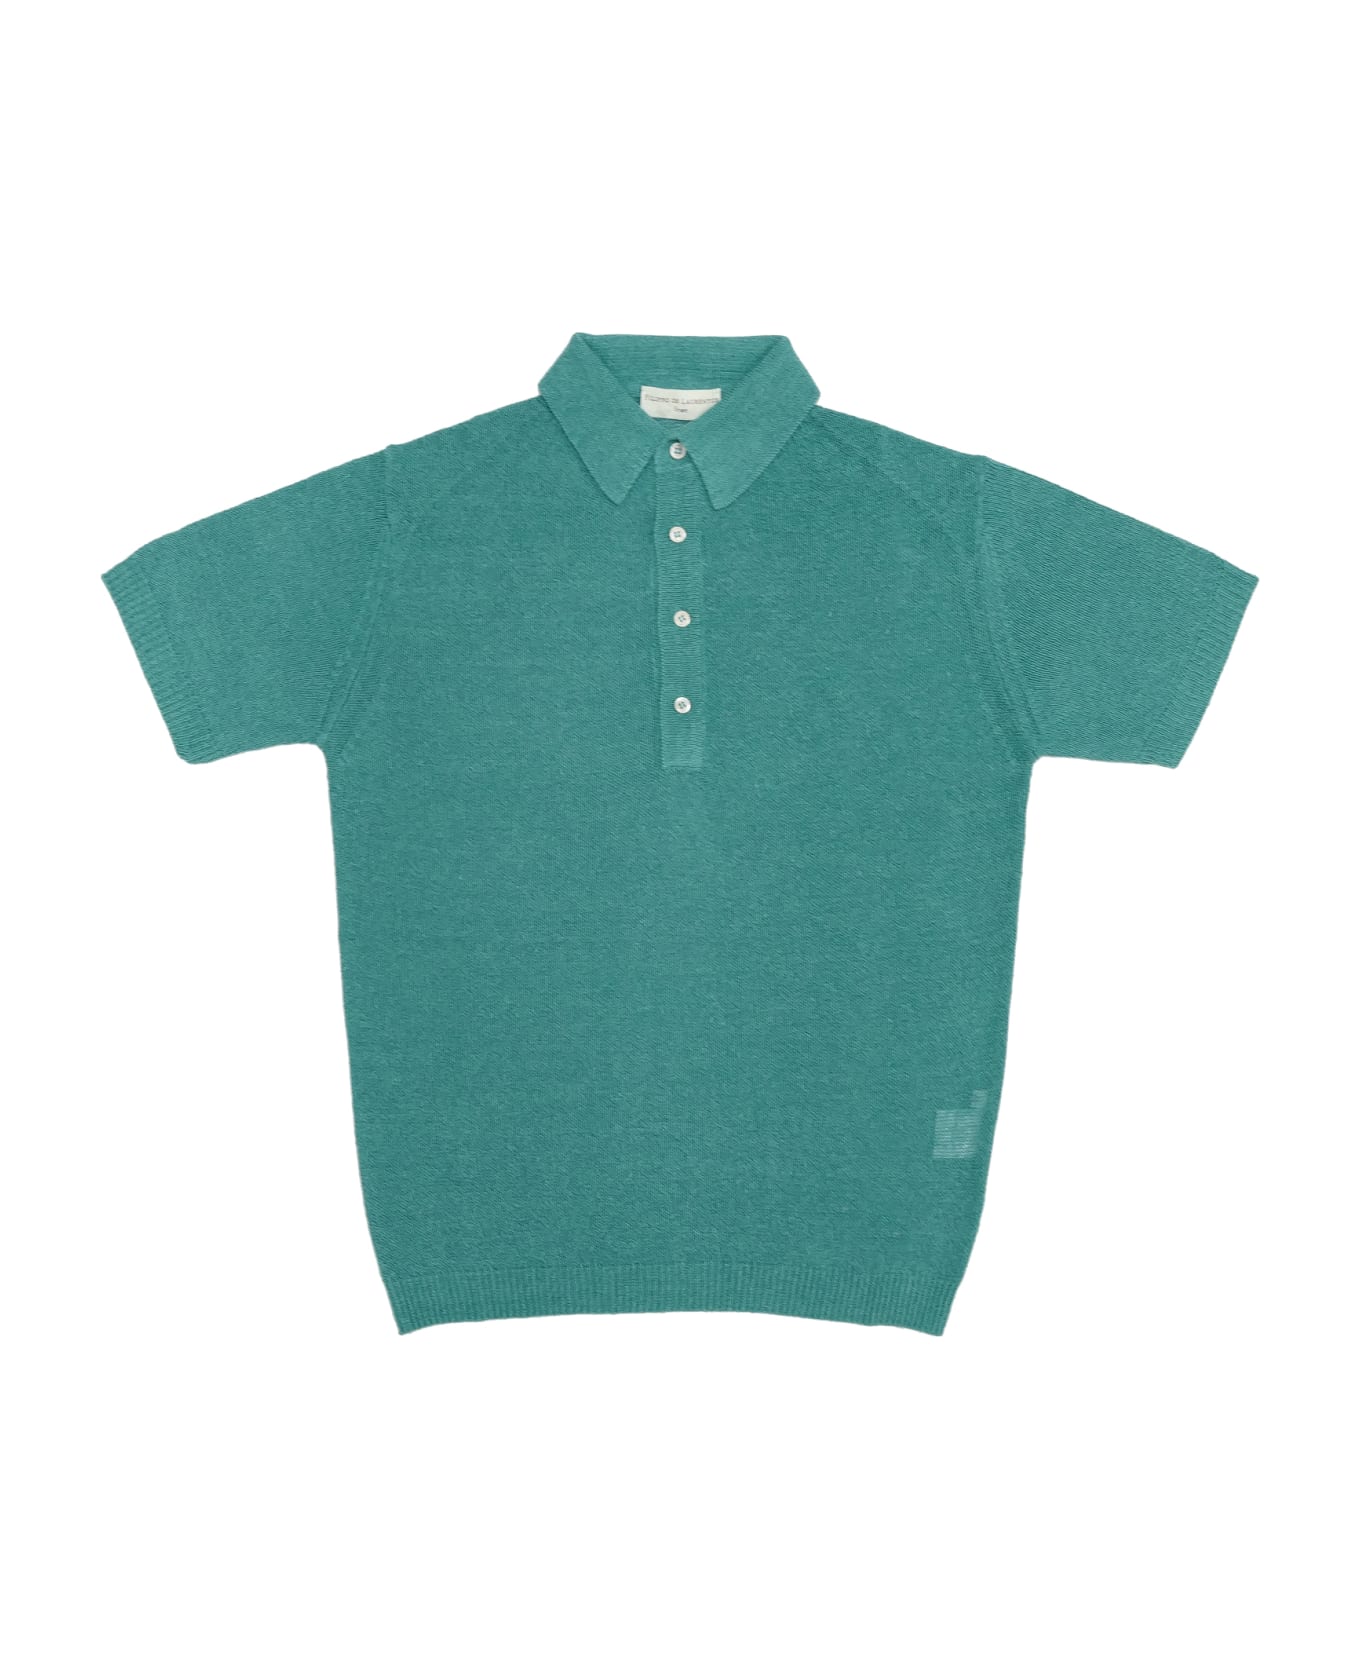 Filippo De Laurentiis Polo Shirt - Turquoise ポロシャツ